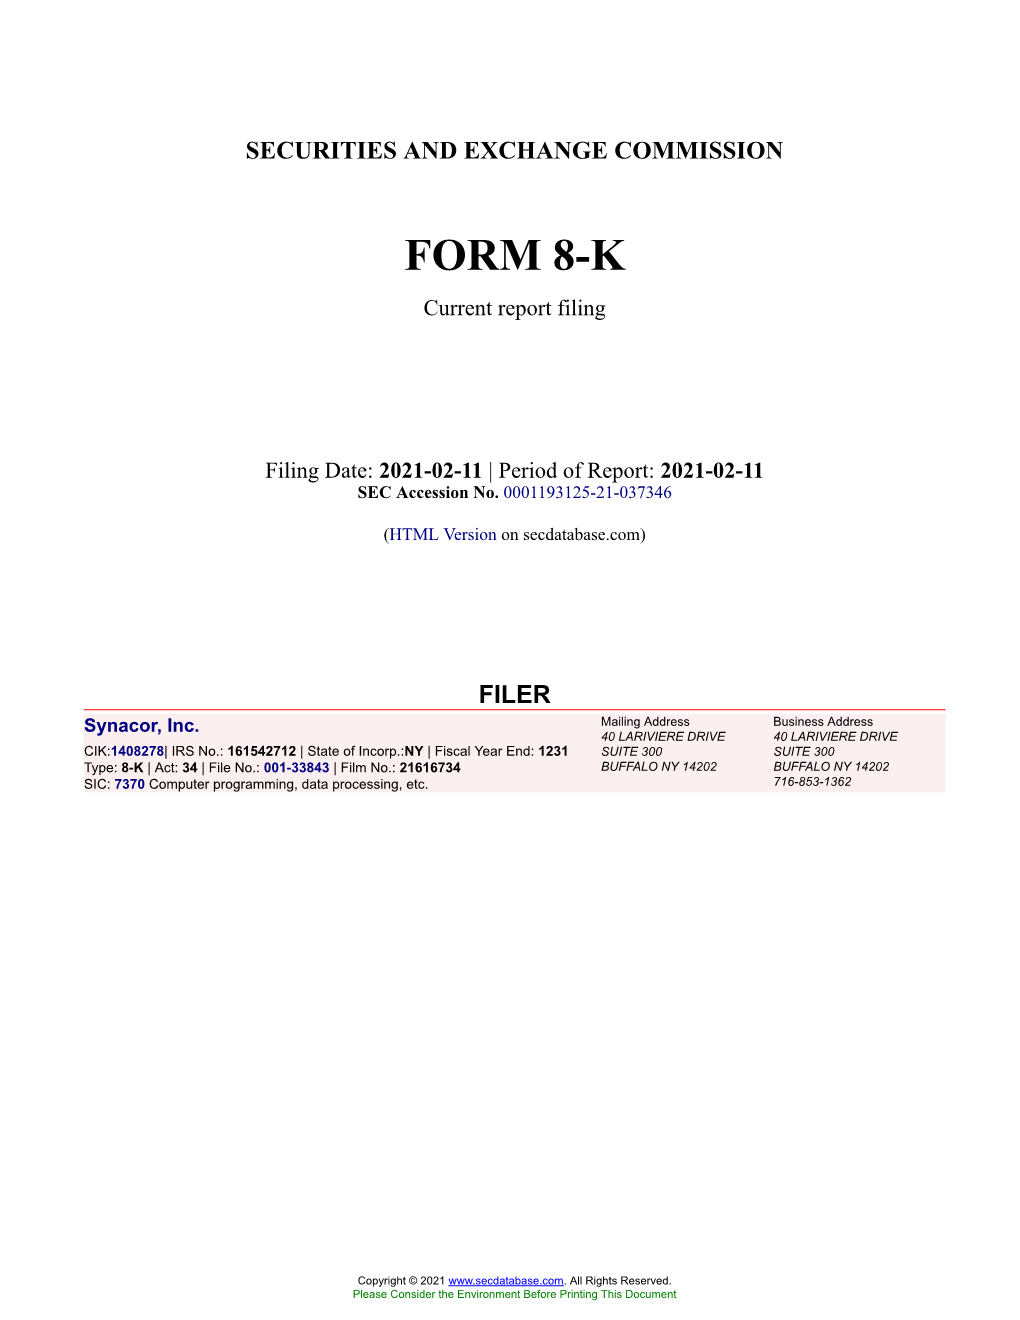 Synacor, Inc. Form 8-K Current Event Report Filed 2021-02-11